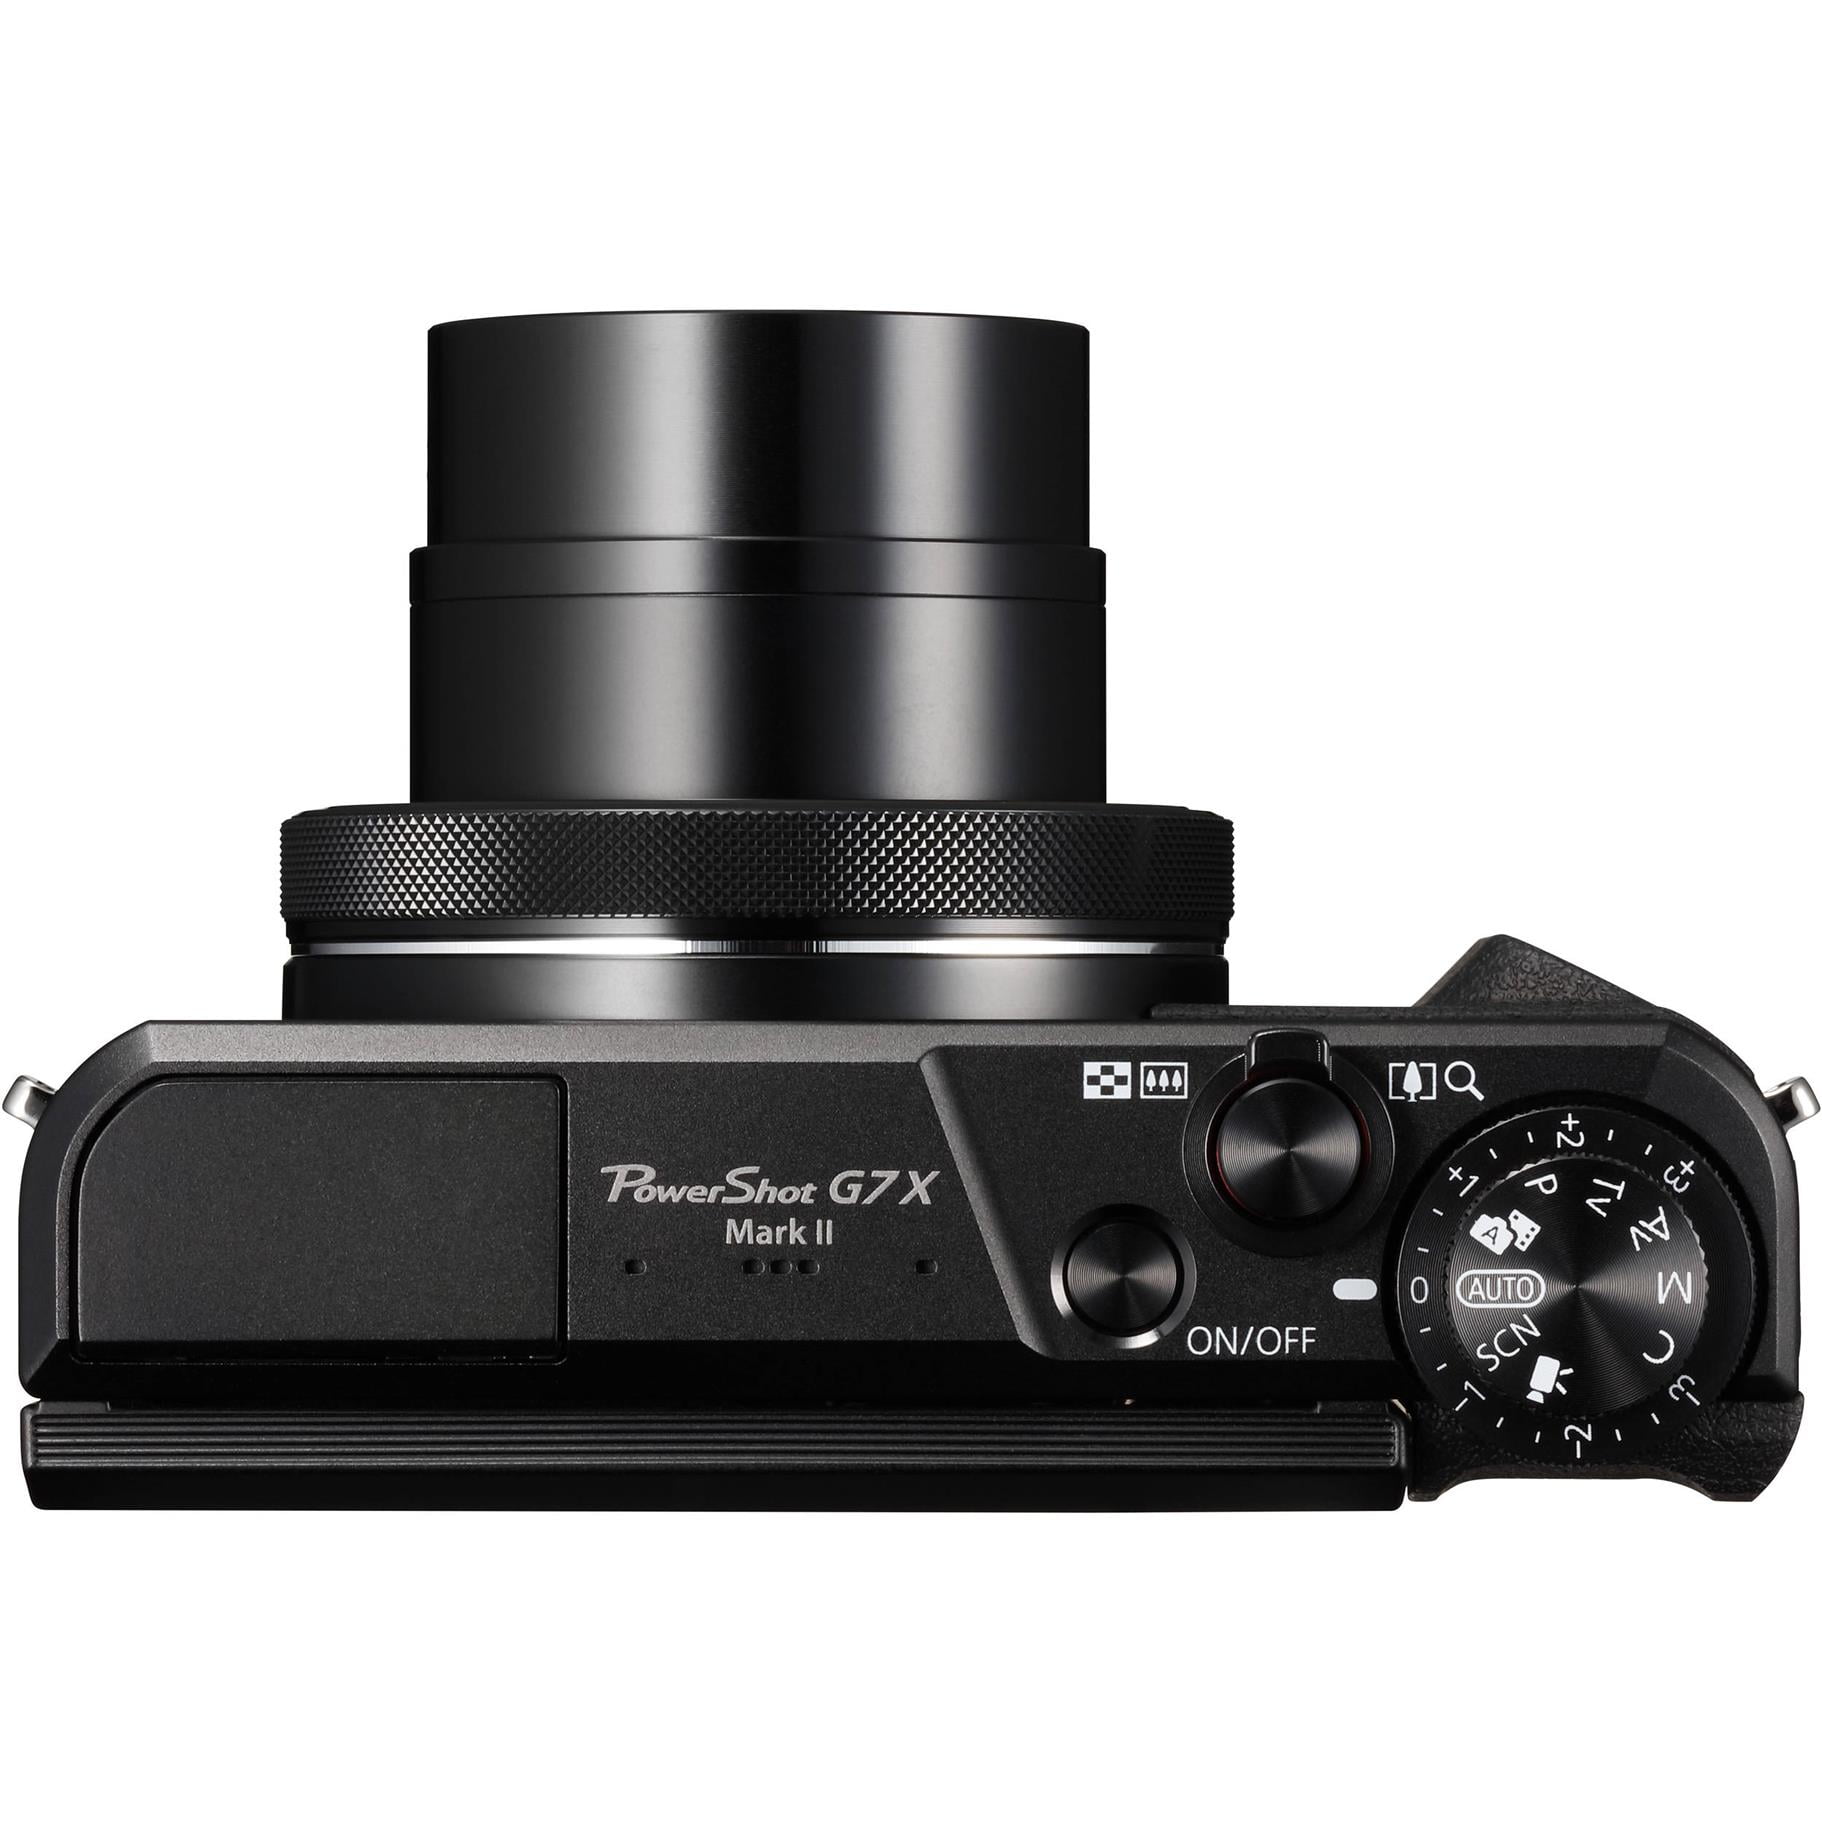 Canon PowerShot G7 X Mark II Digital Camera (Black) | Walmart Canada